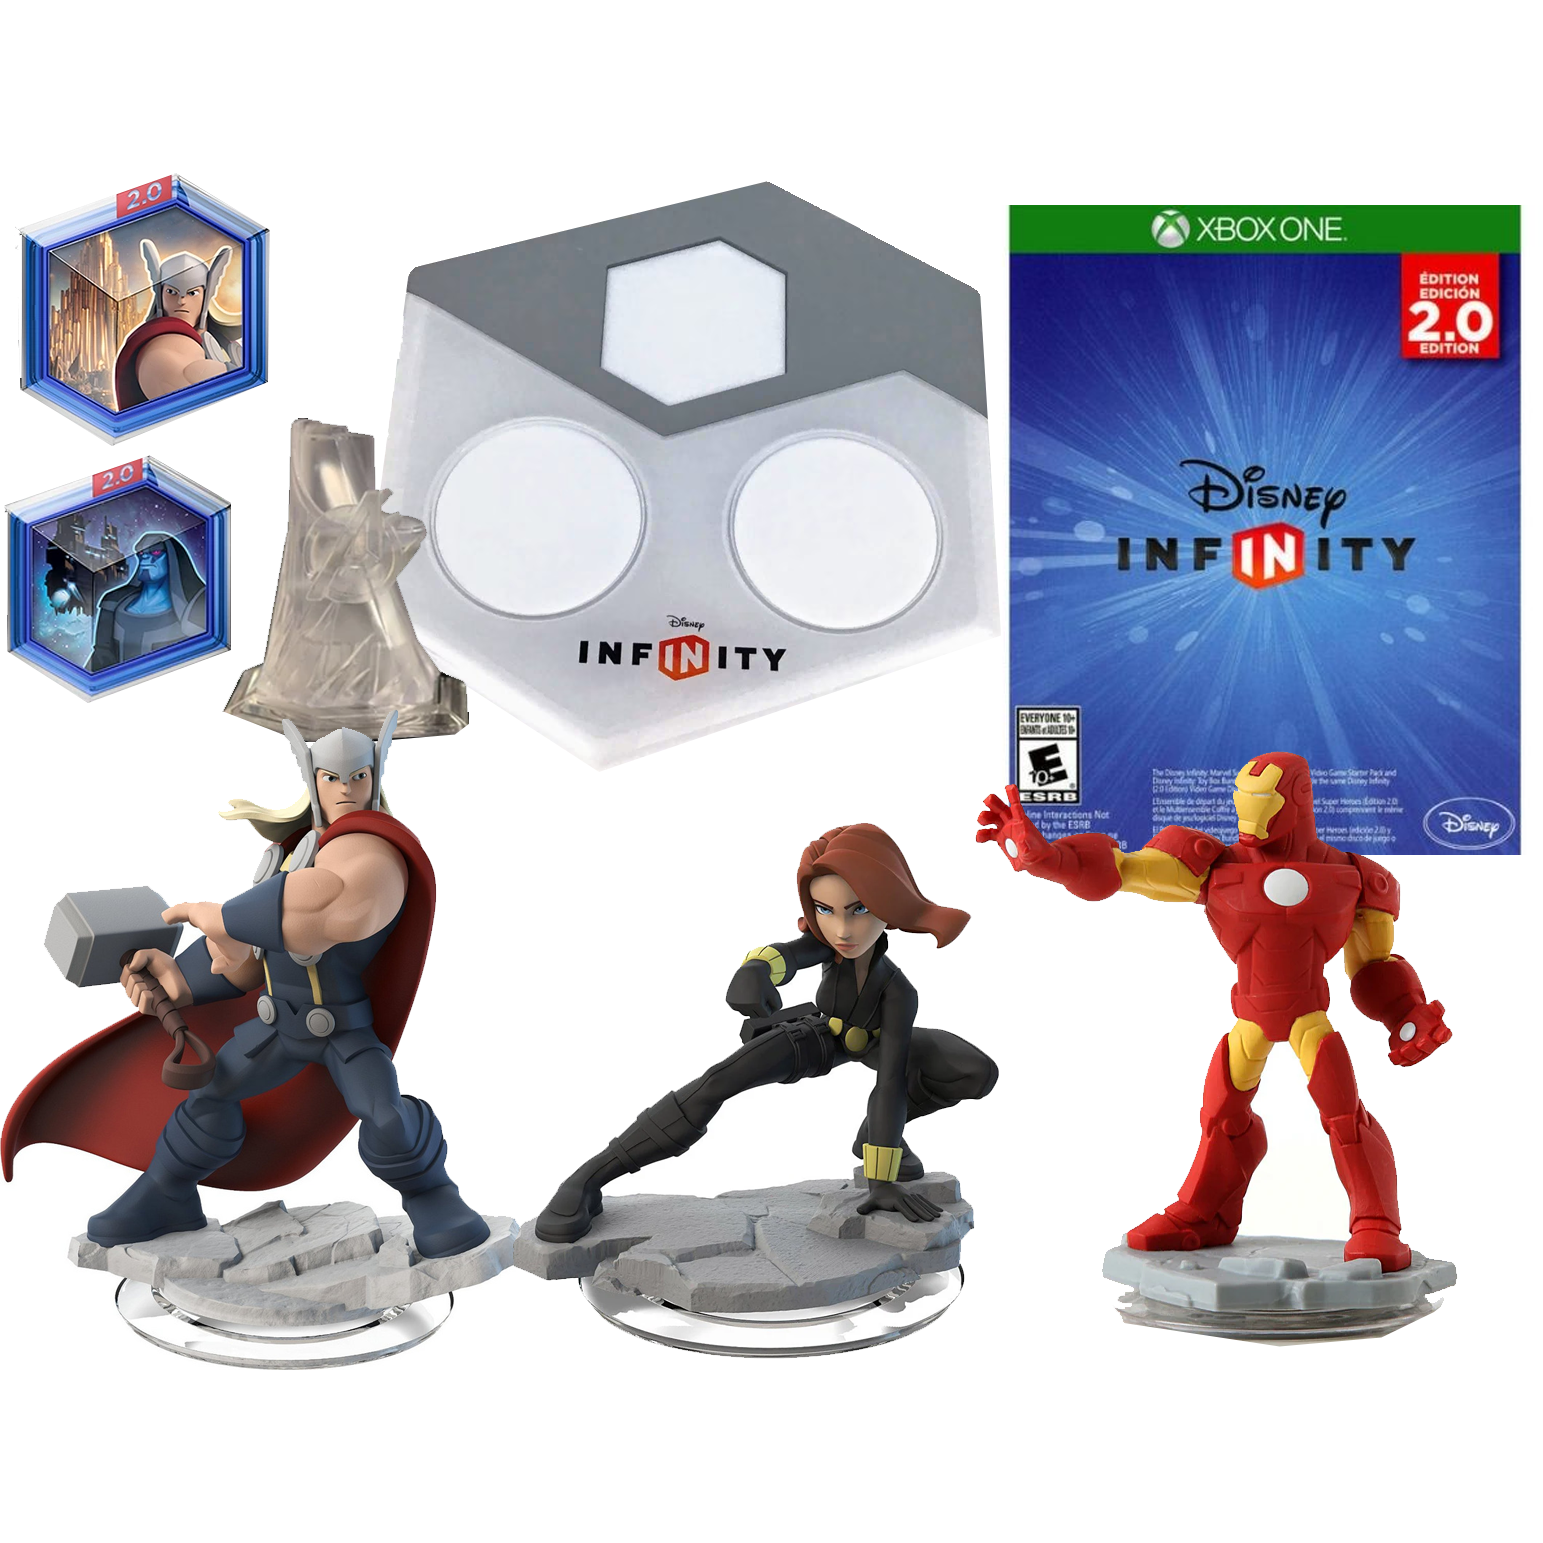 XBOX ONE - Pack de démarrage Disney Infinity 2.0